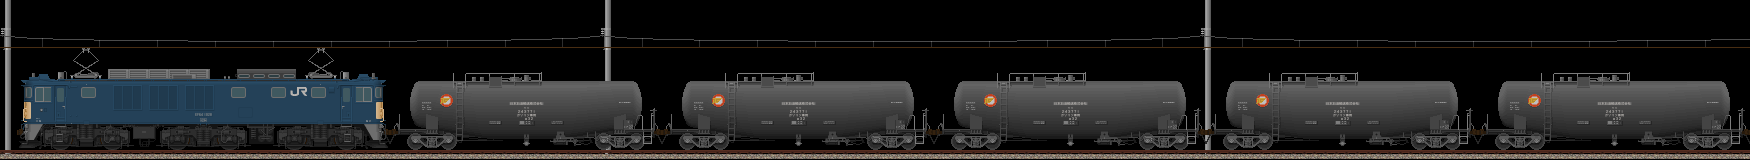 EF64 1000番台の牽く石油貨物列車(2012/5/13更新)